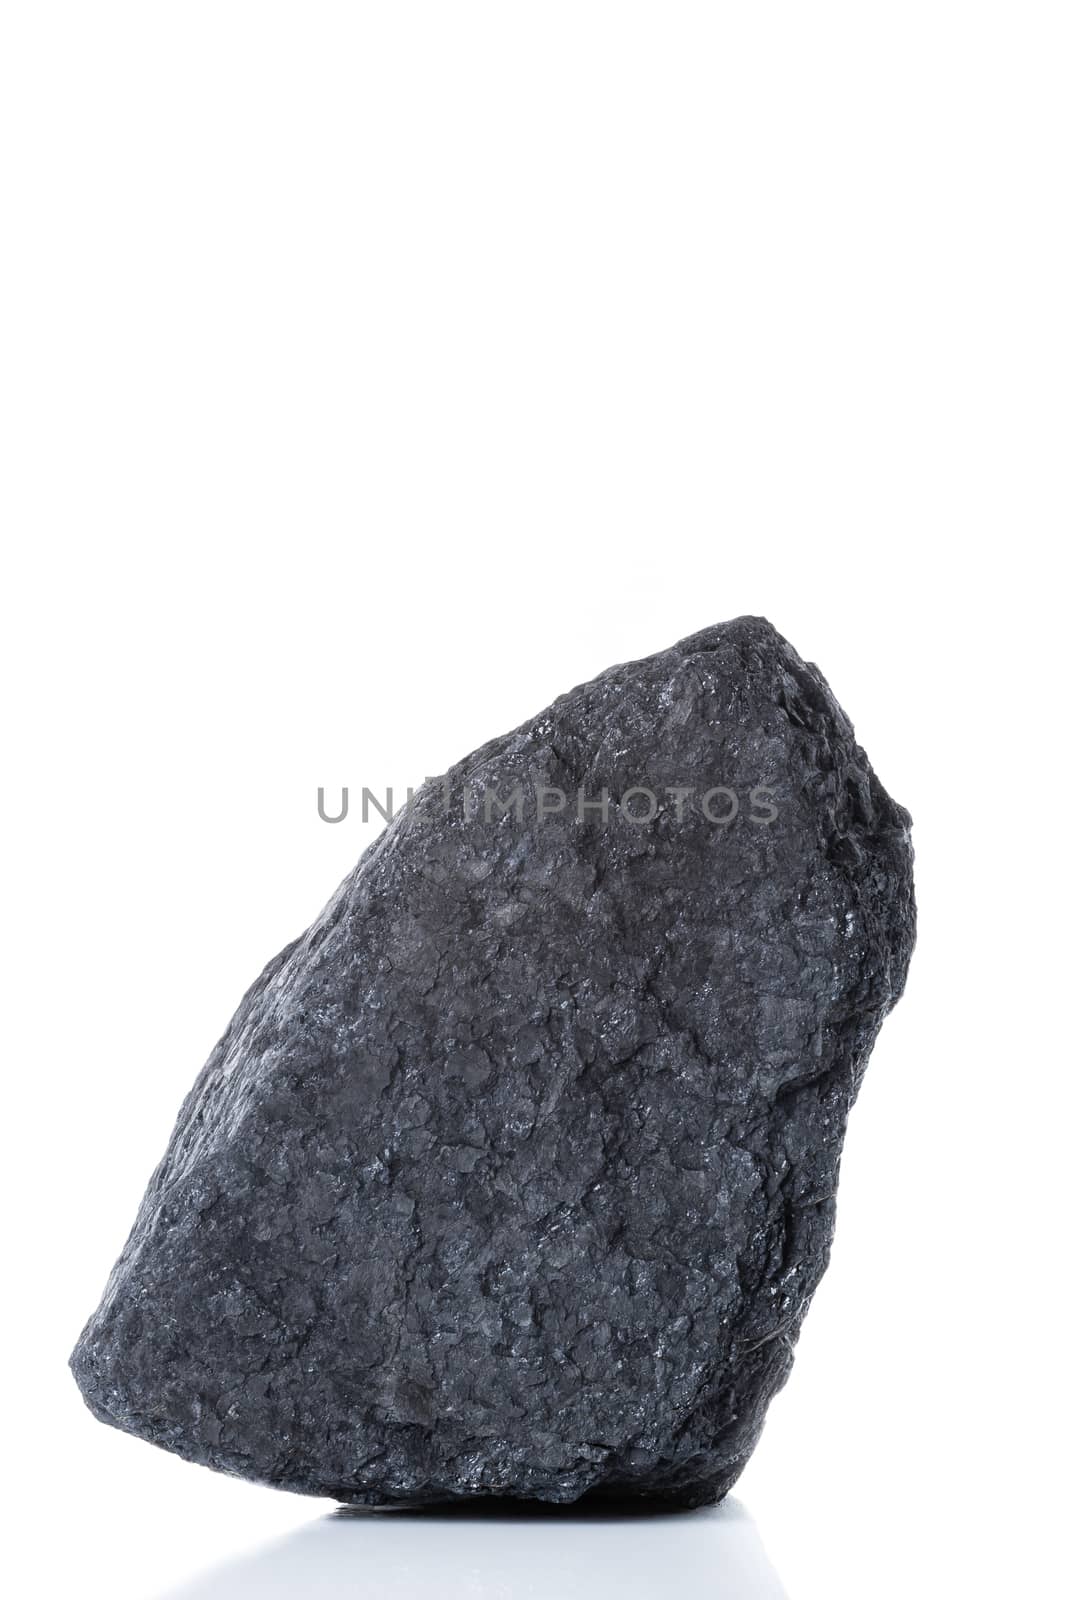 large piece of black bituminous coal on a white background